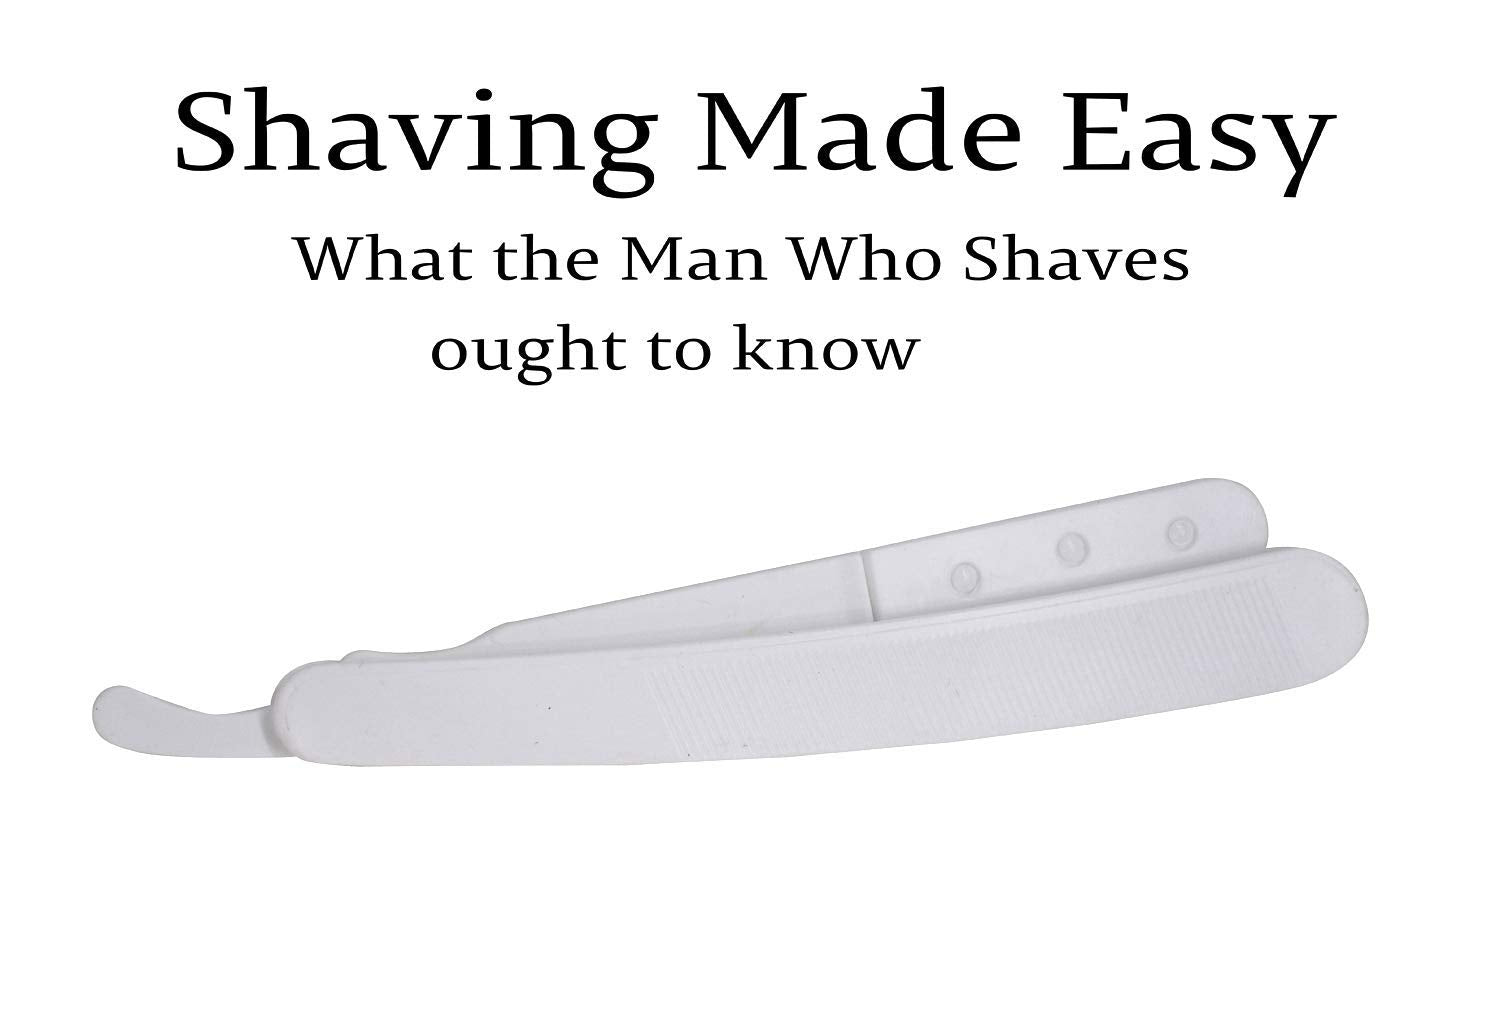 NJ Professional Disposable Shaving Ustra Razor For Salon Barber Use Safe Shaving For Men And Boys: 6 Pcs